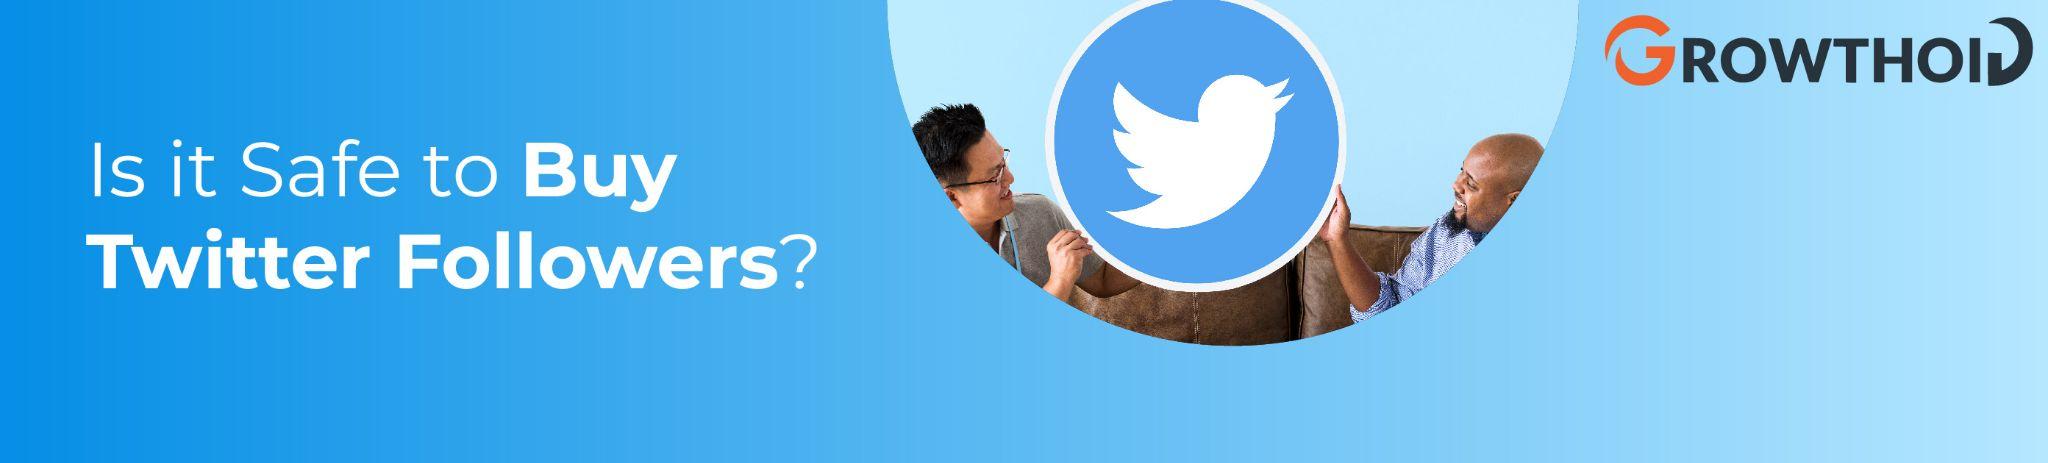 Is it Safe to Buy Twitter Followers?